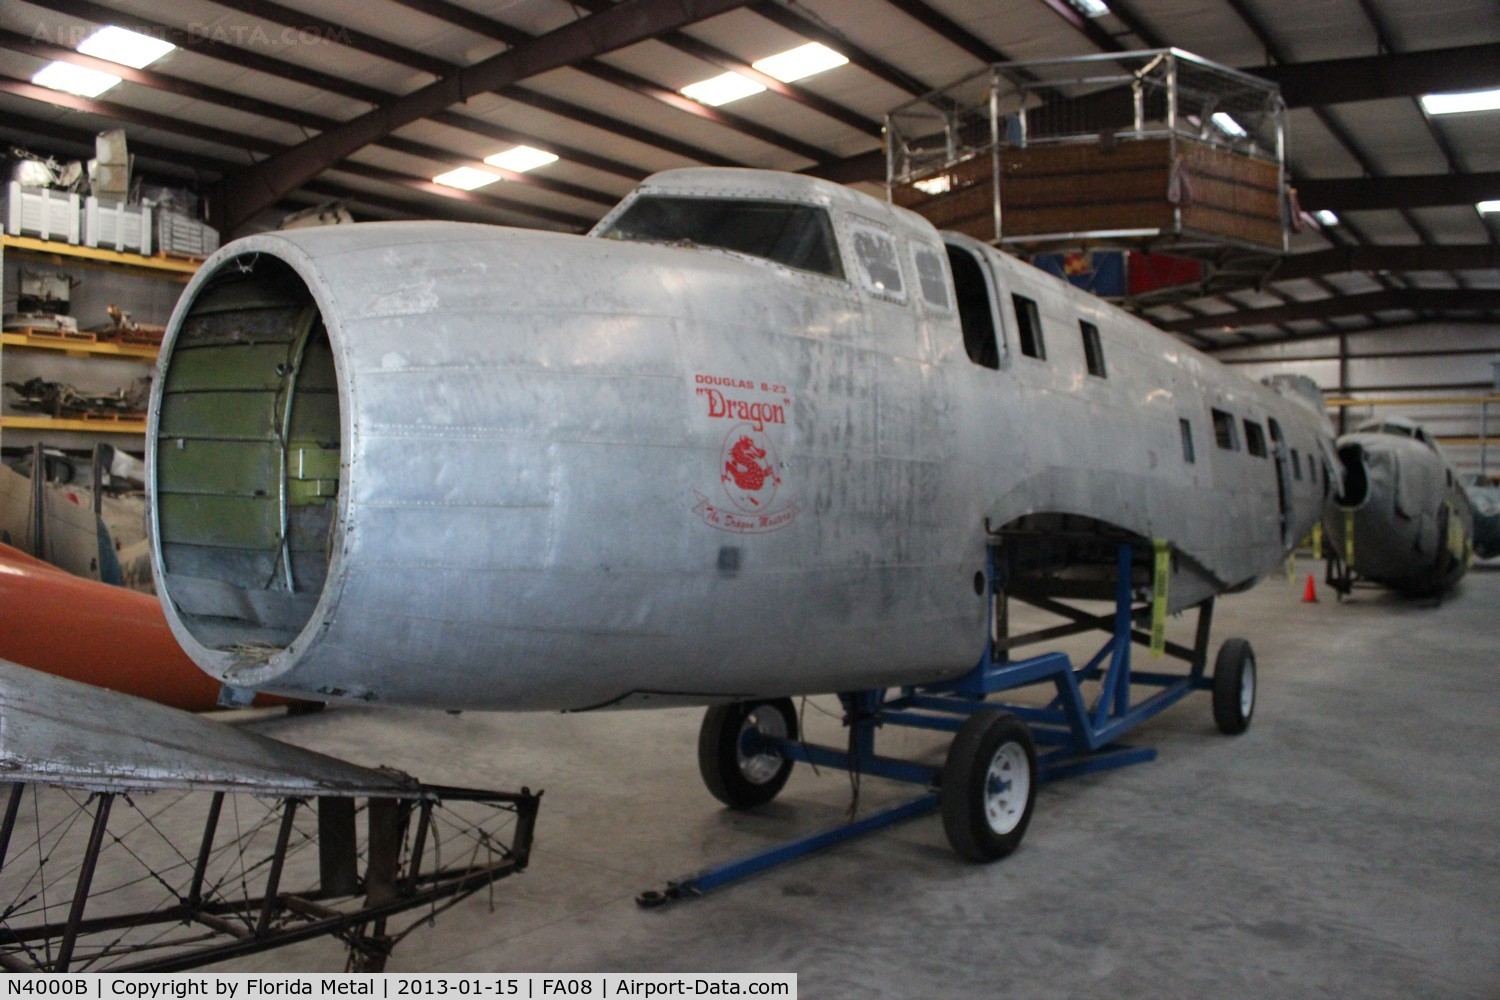 N4000B, 1940 Douglas B-23 Dragon C/N 2743, B-23 restoration project at Fantasy of Flight